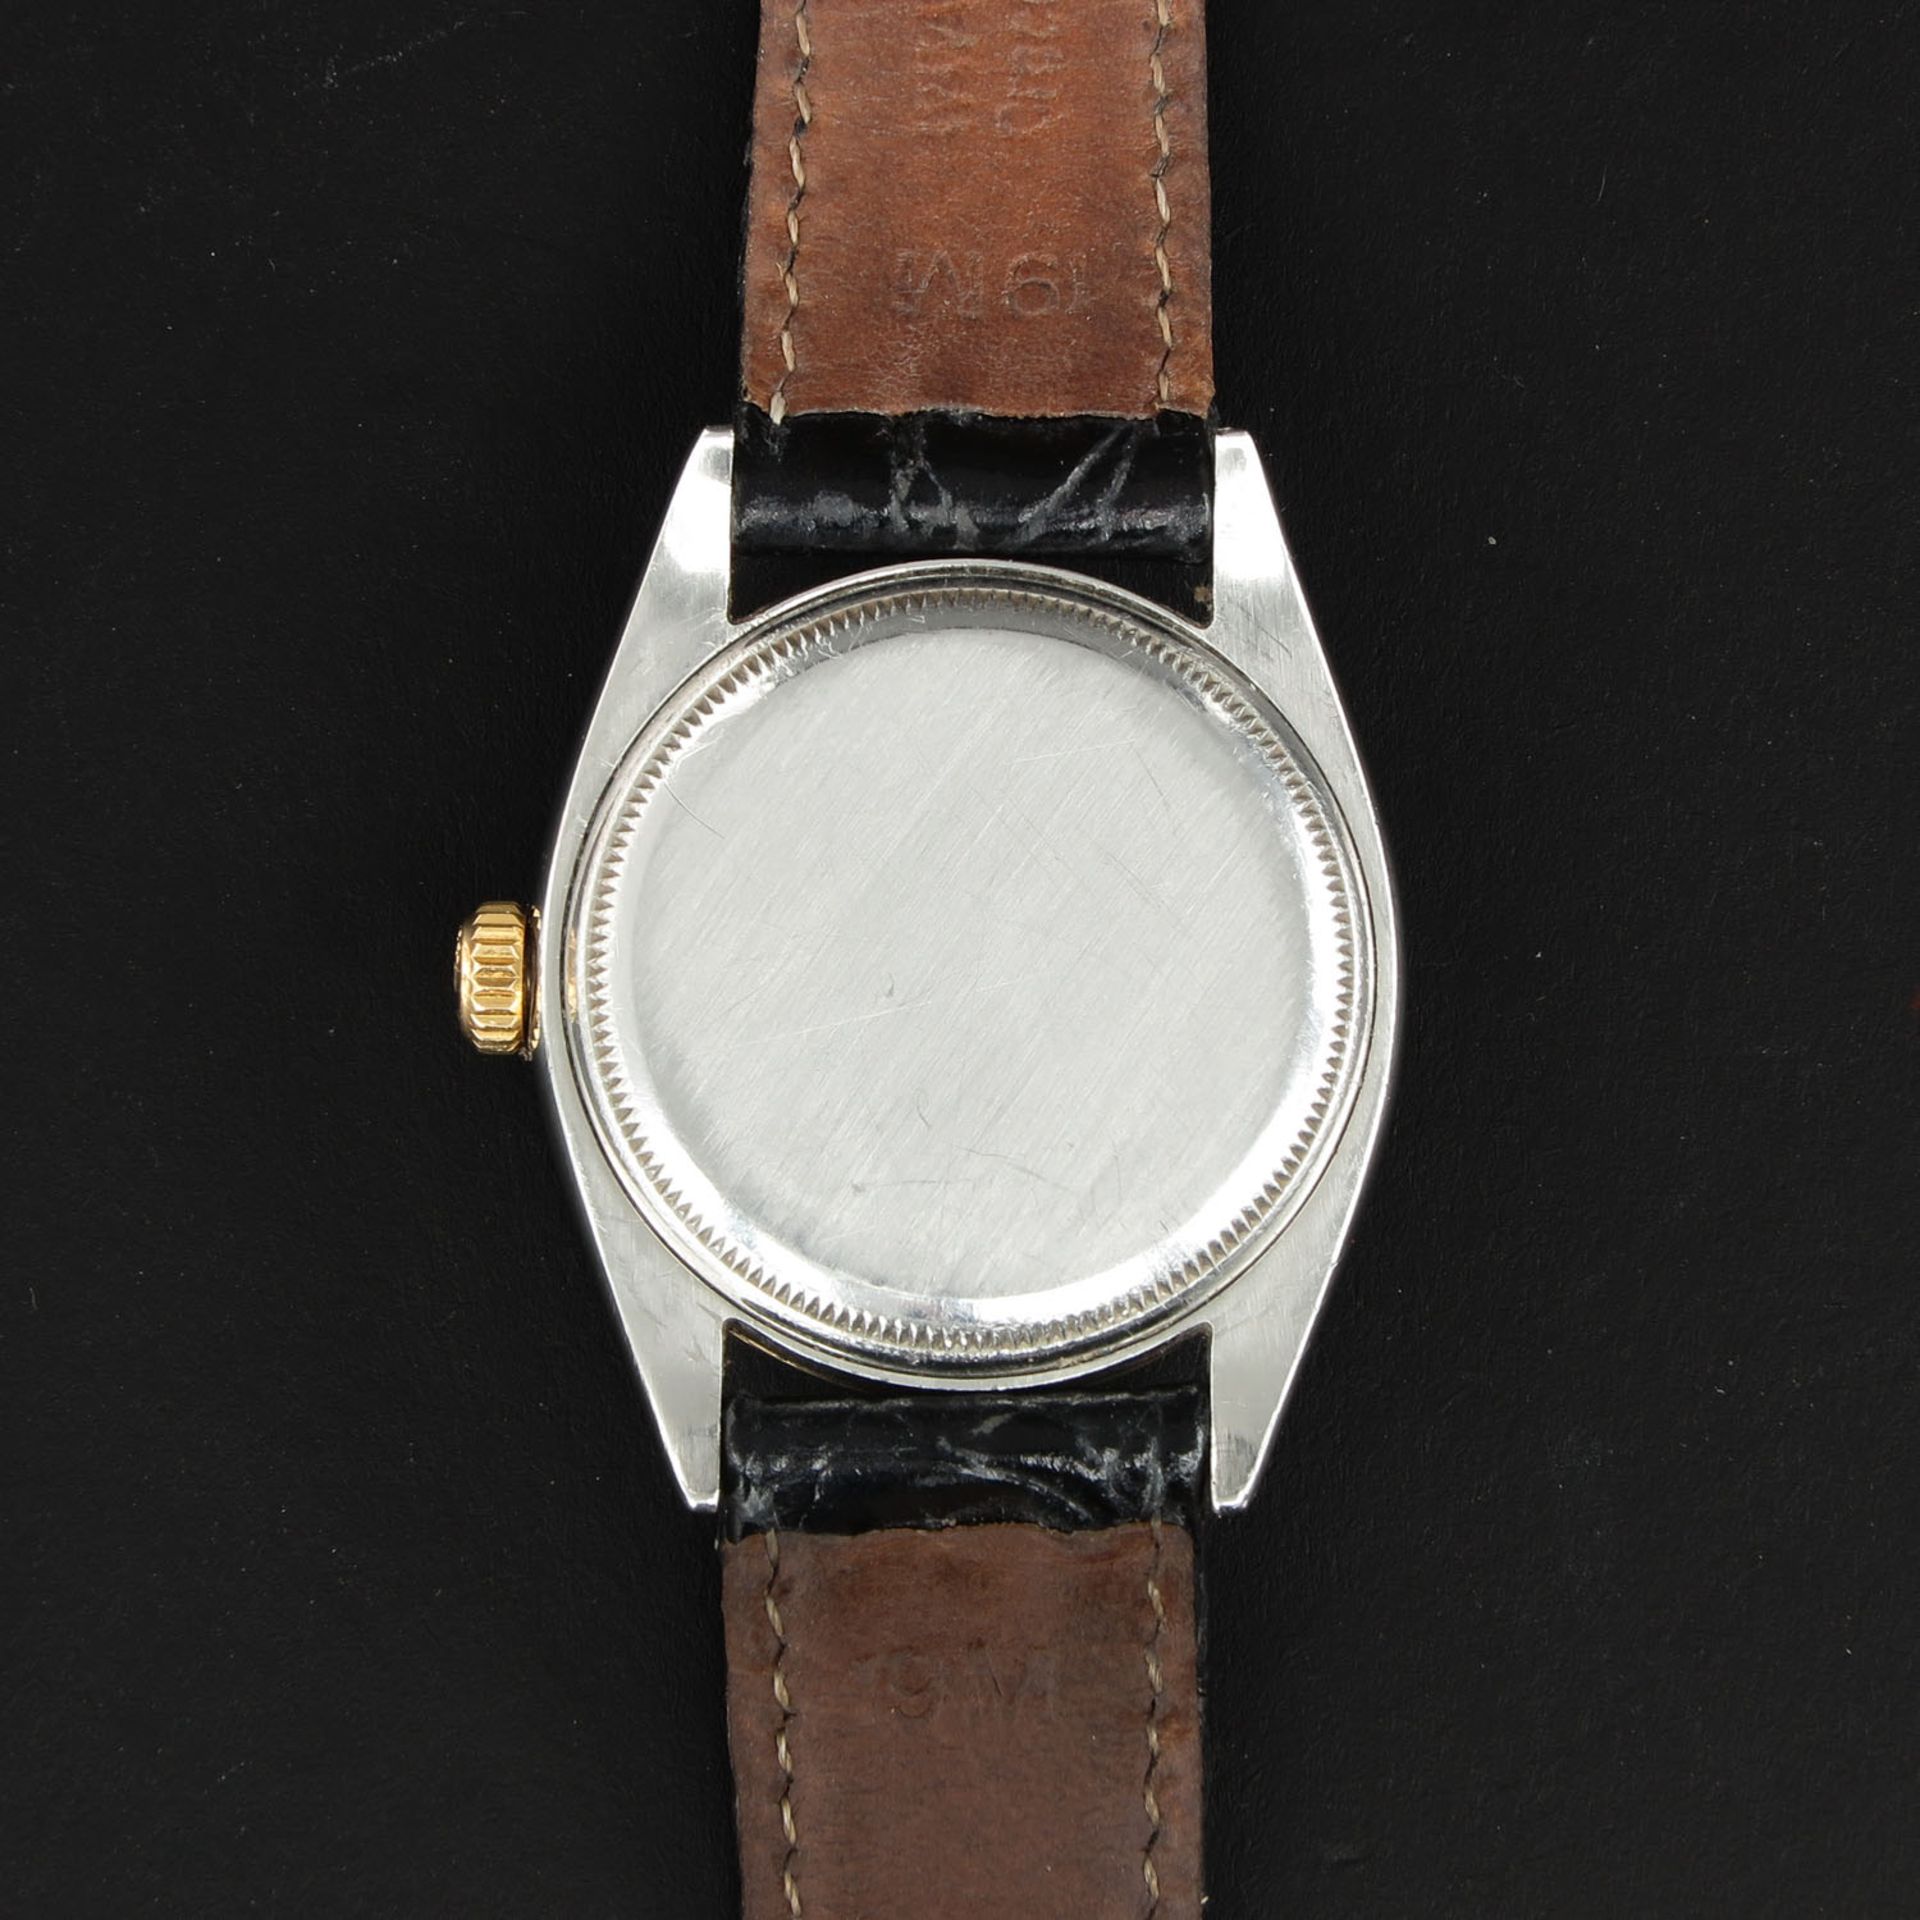 A Mens Rolex Oyster Perpetual Chronometer Watch - Bild 3 aus 3